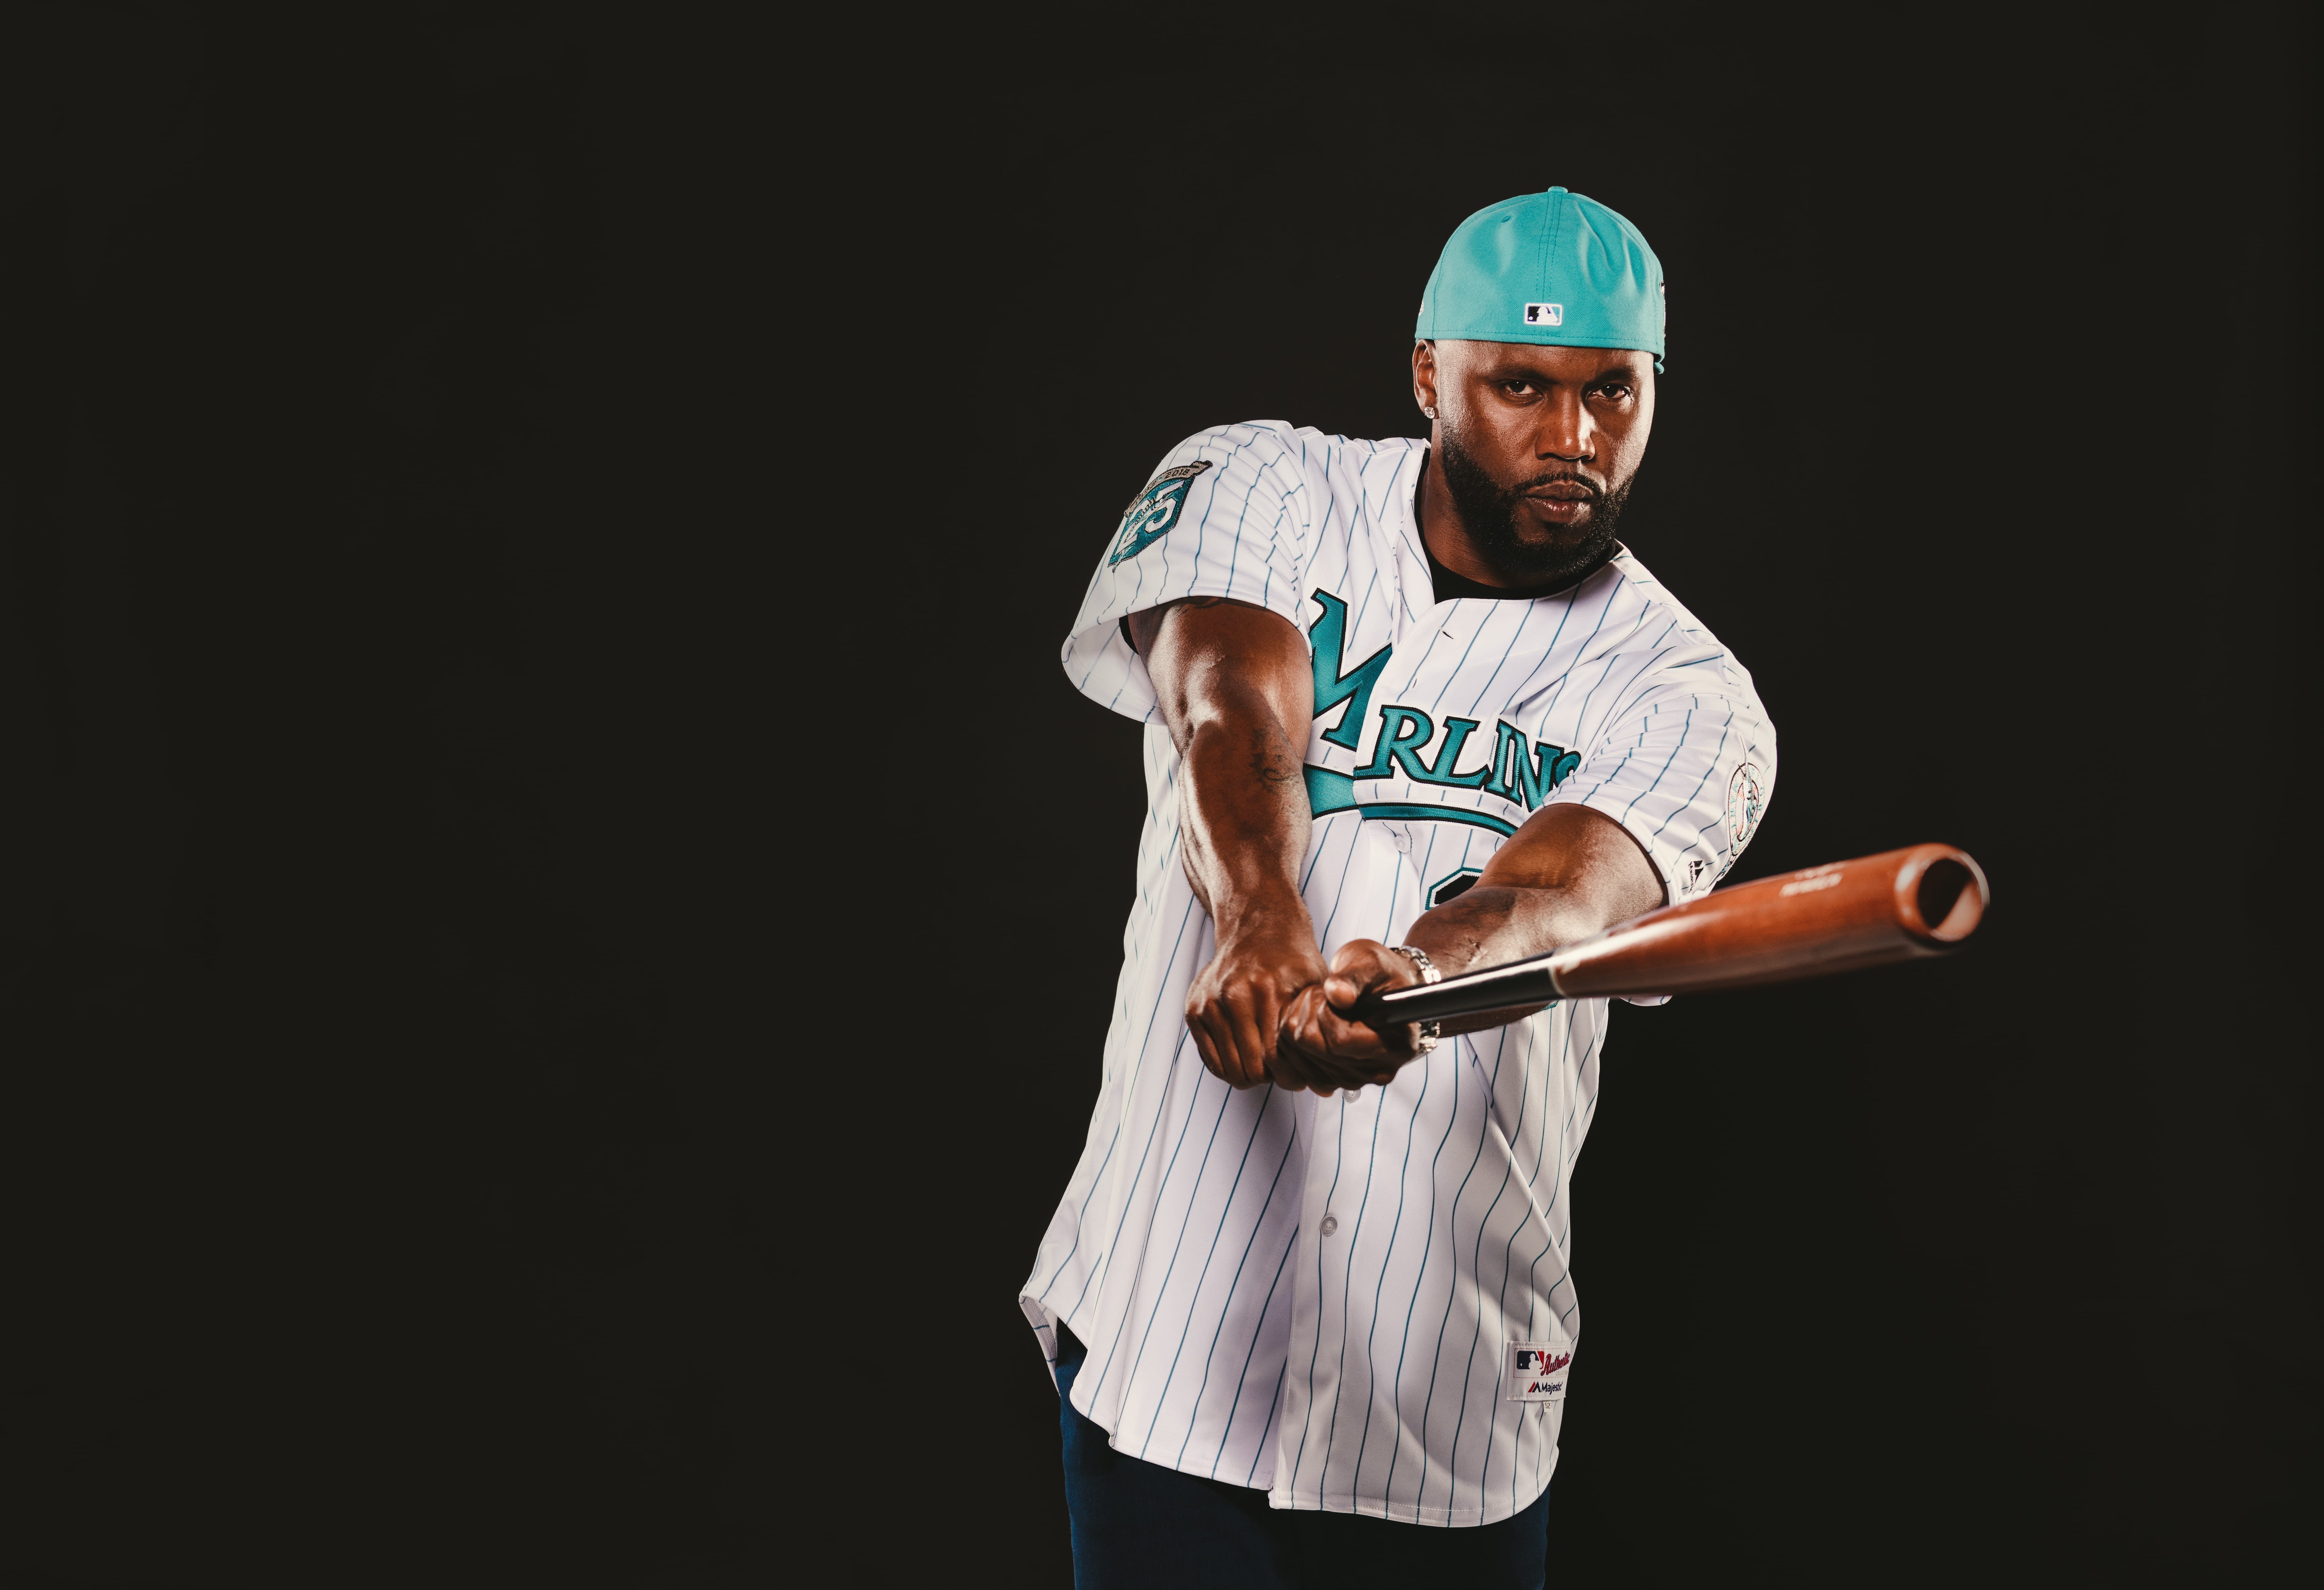 IU C&I Studios Ball Cap Liner Marlins baseball player wearing cap backwards posing for the camera holding a bat in a batting pose